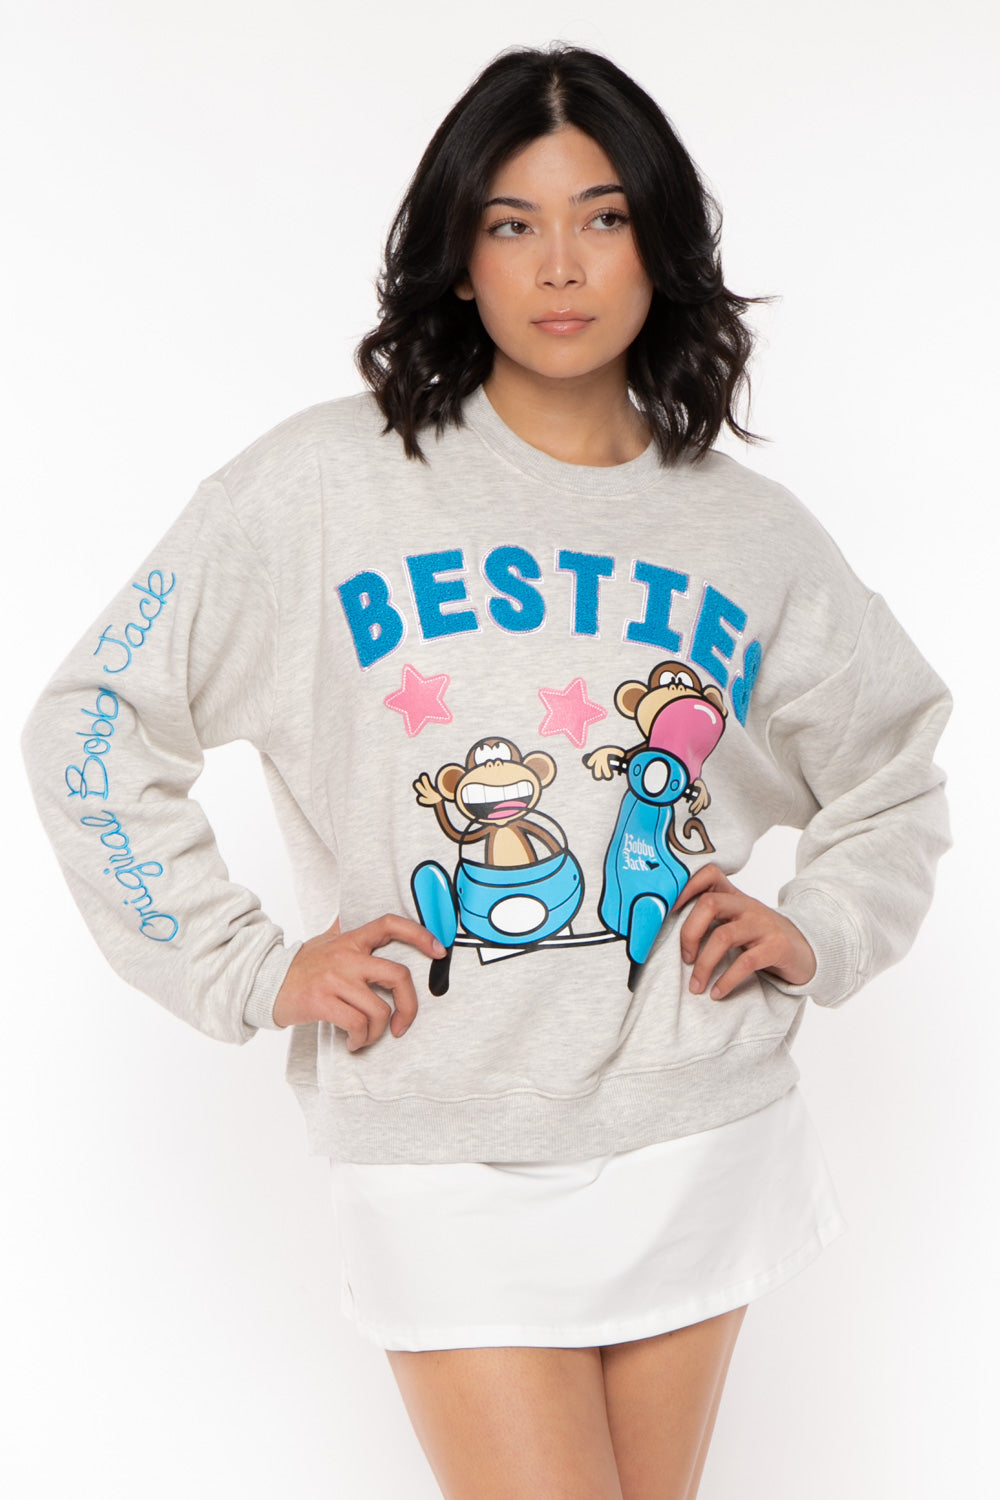 Besties - Bobby Jack Oversized Premium Sweatshirt - Heather Grey